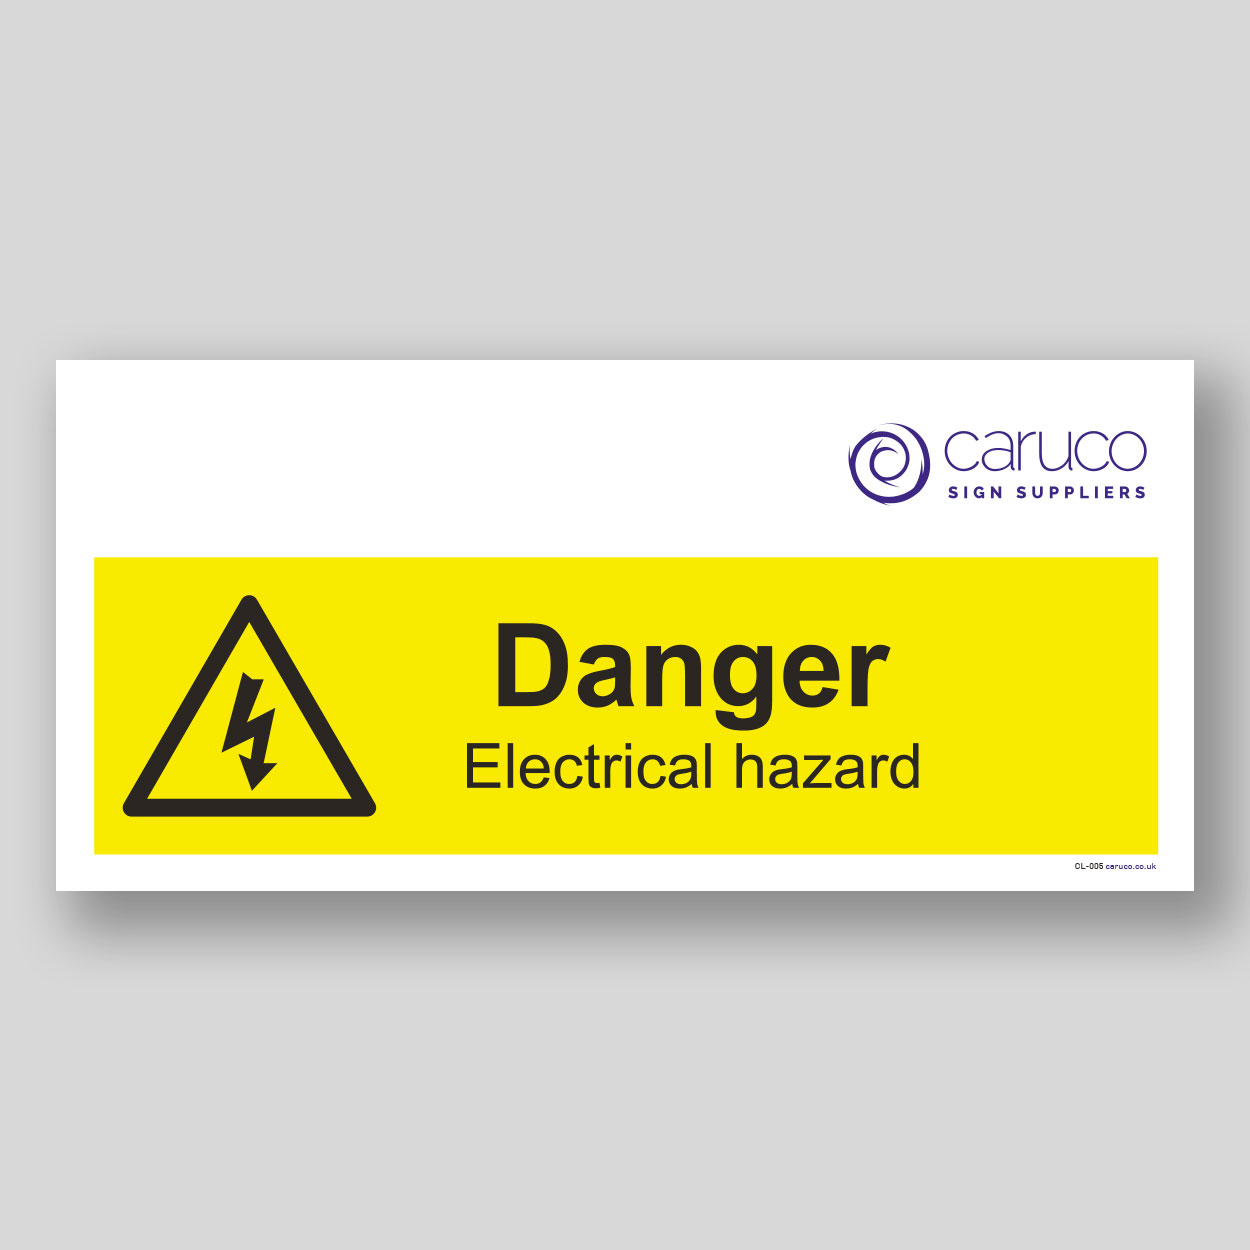 CL-005 Danger - electrical hazard